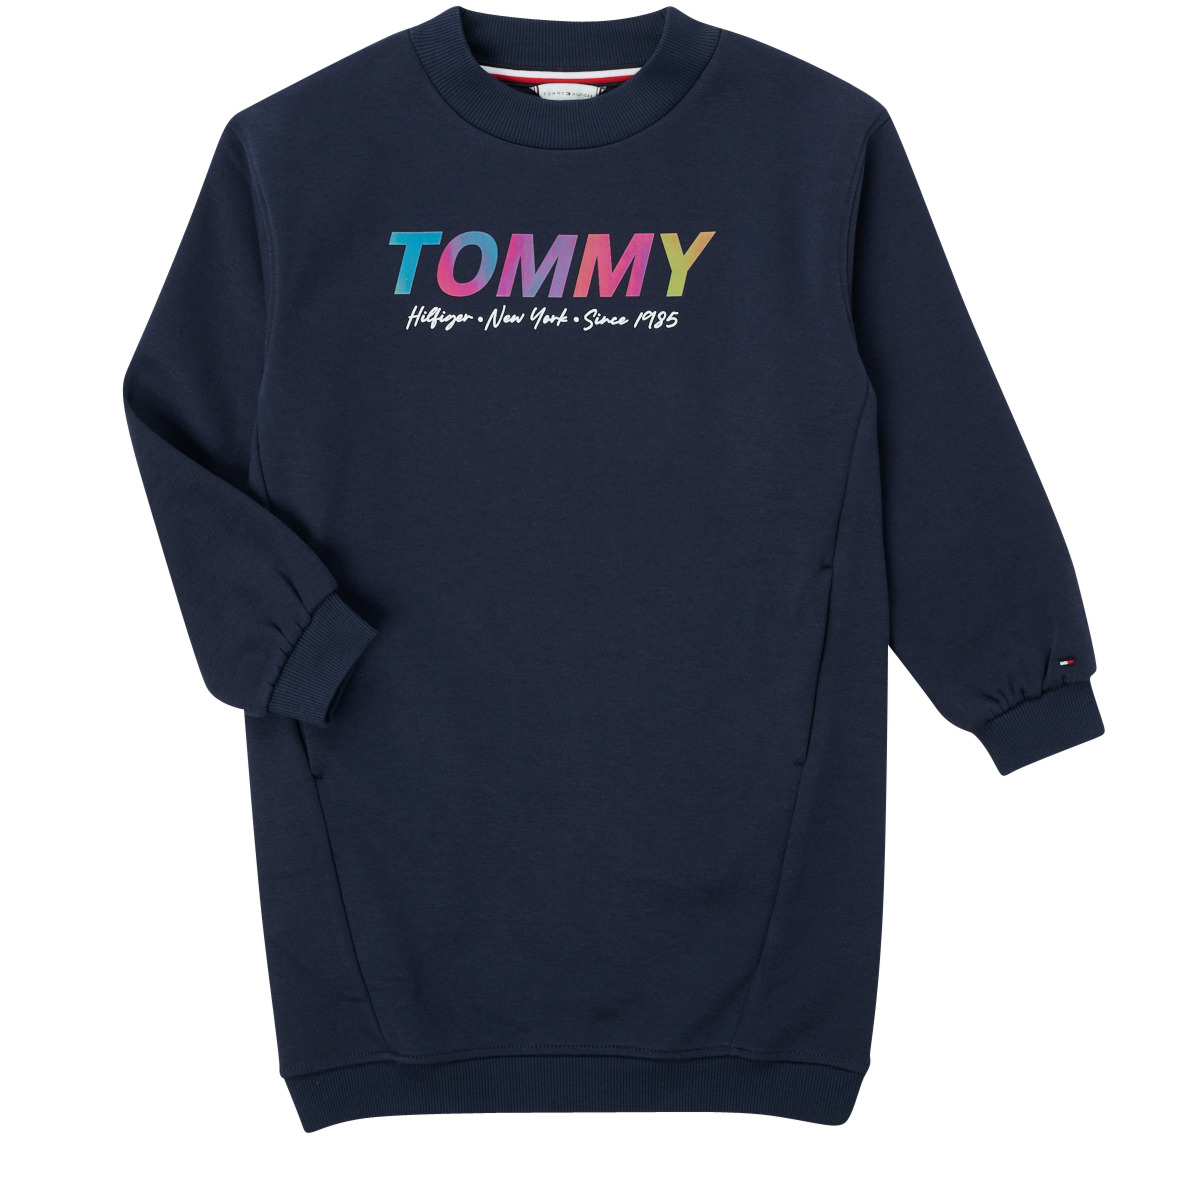 Vêtements Fille Caratteristiche Tommy hilfiger Pantaloni Terry Lounge Bottoms BELISTA Marine